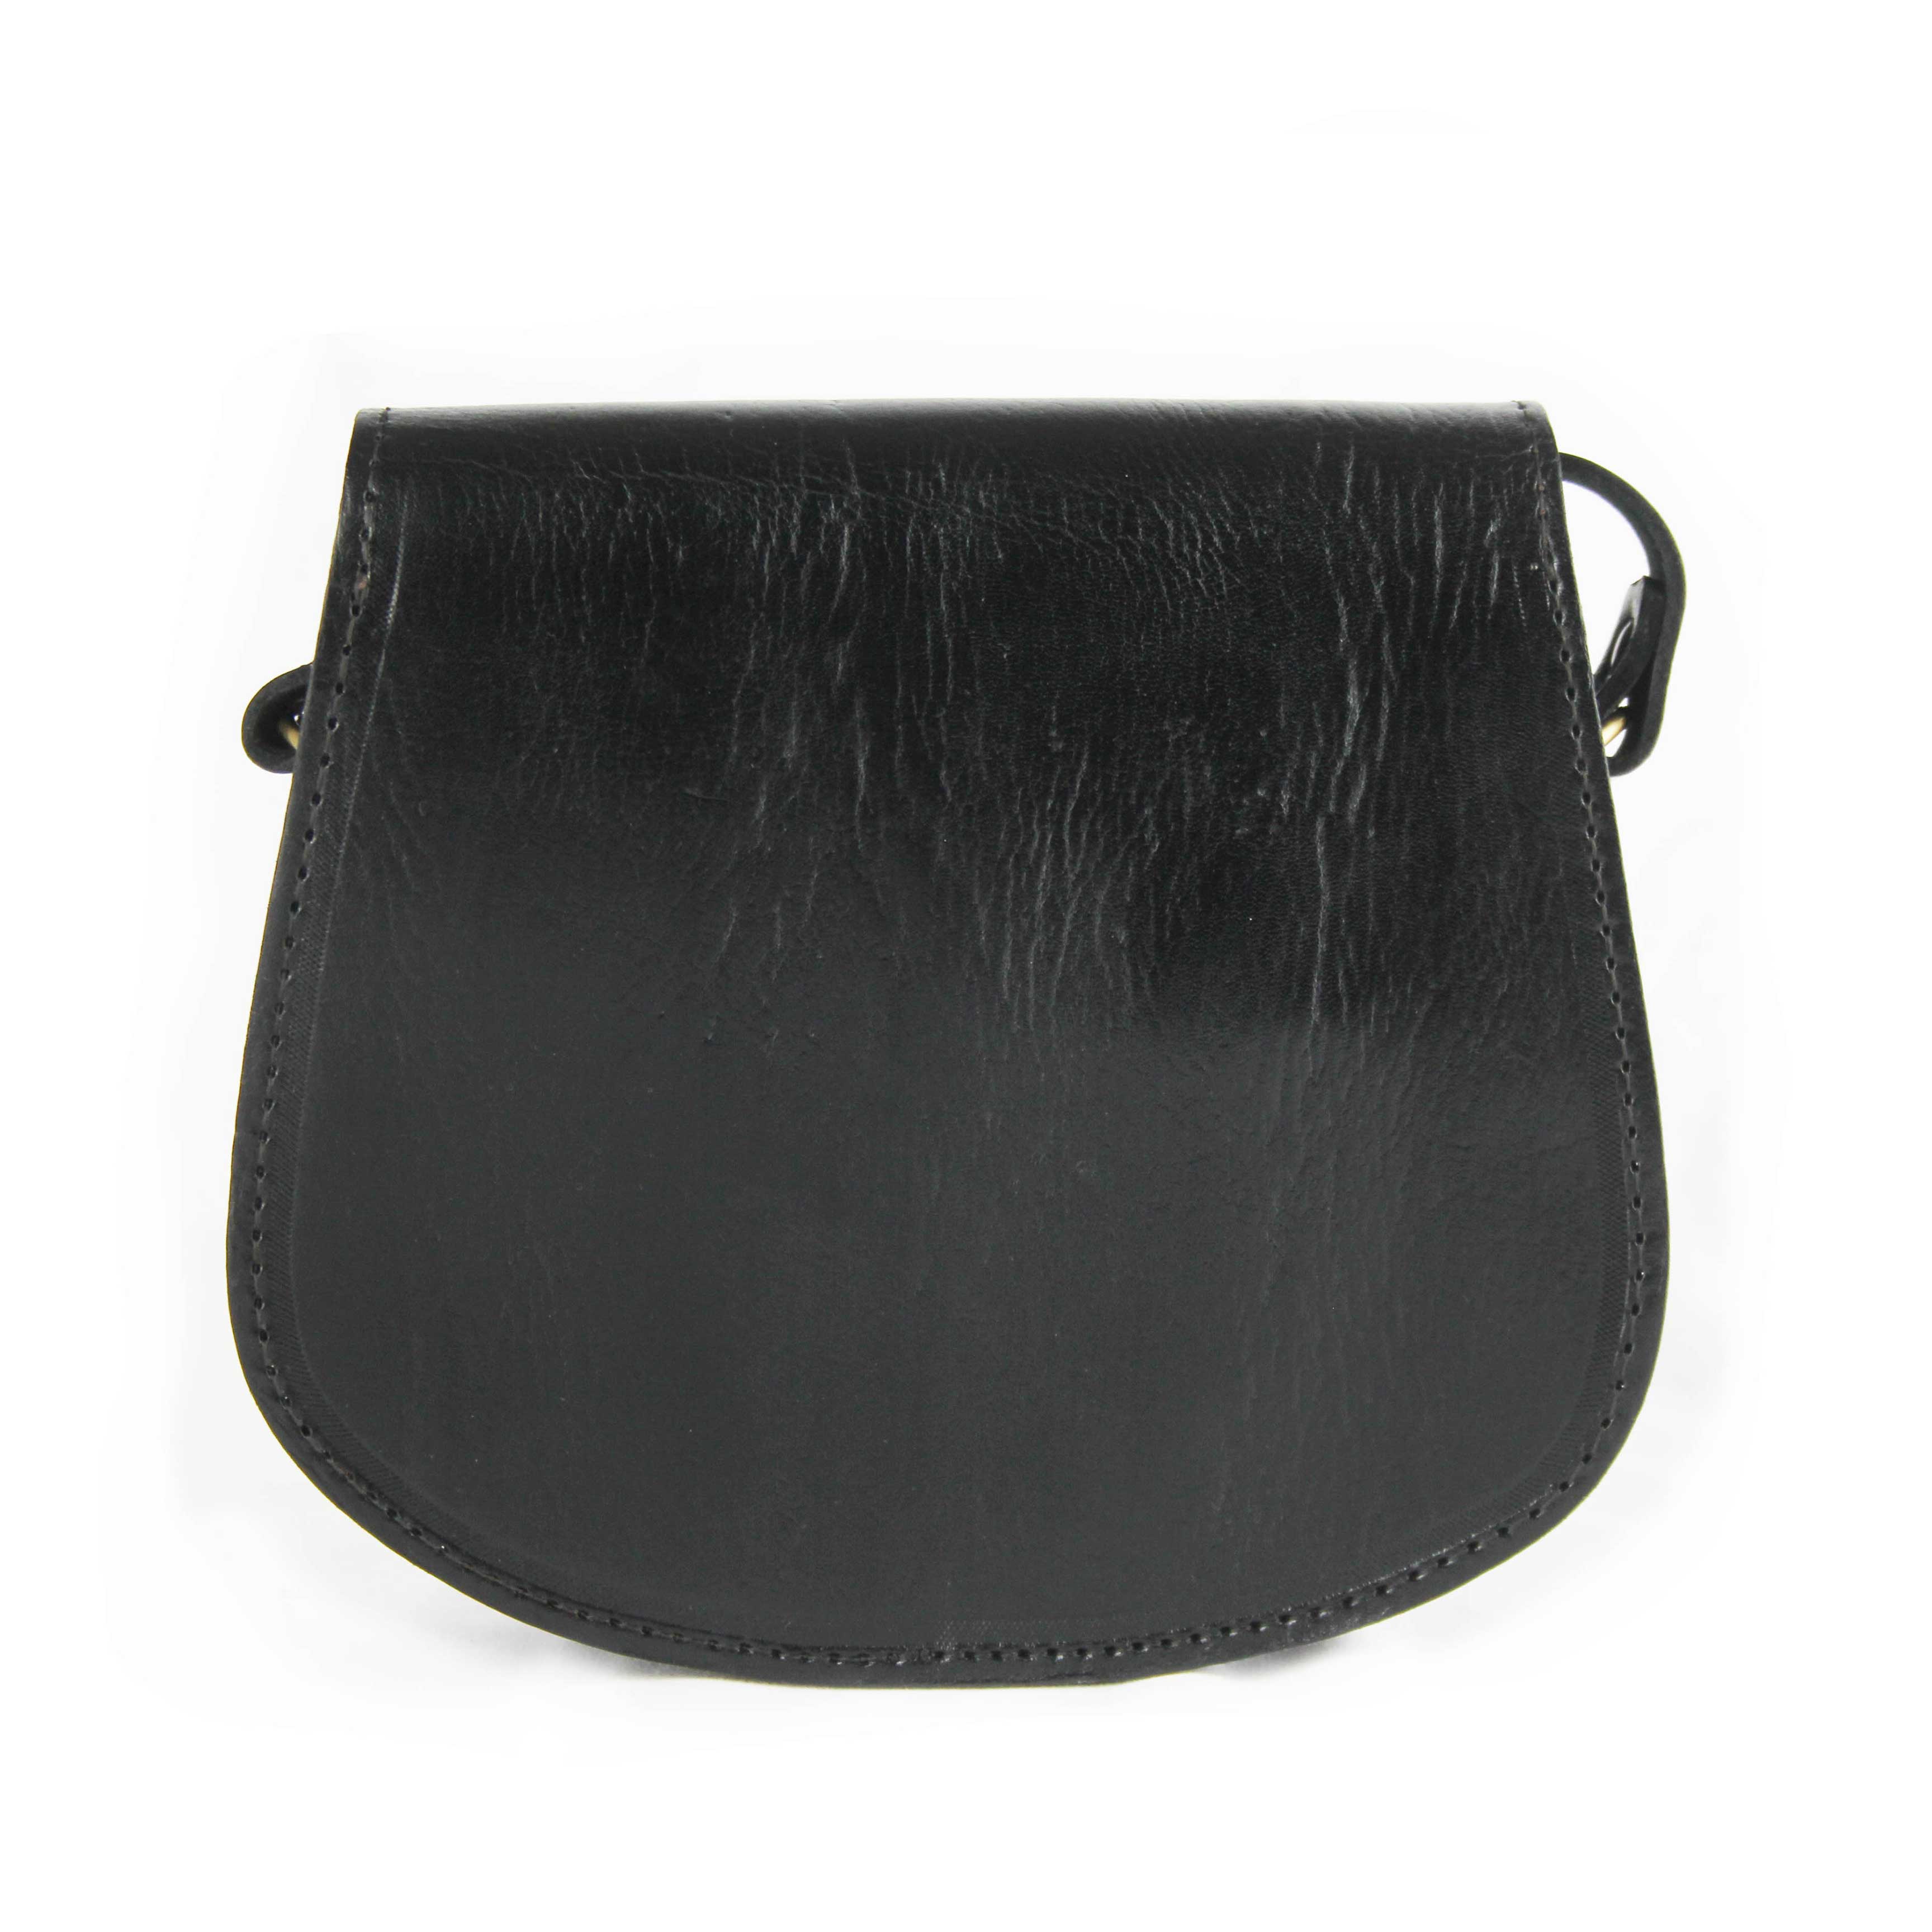 Maya Small Black Leather Saddle Bag